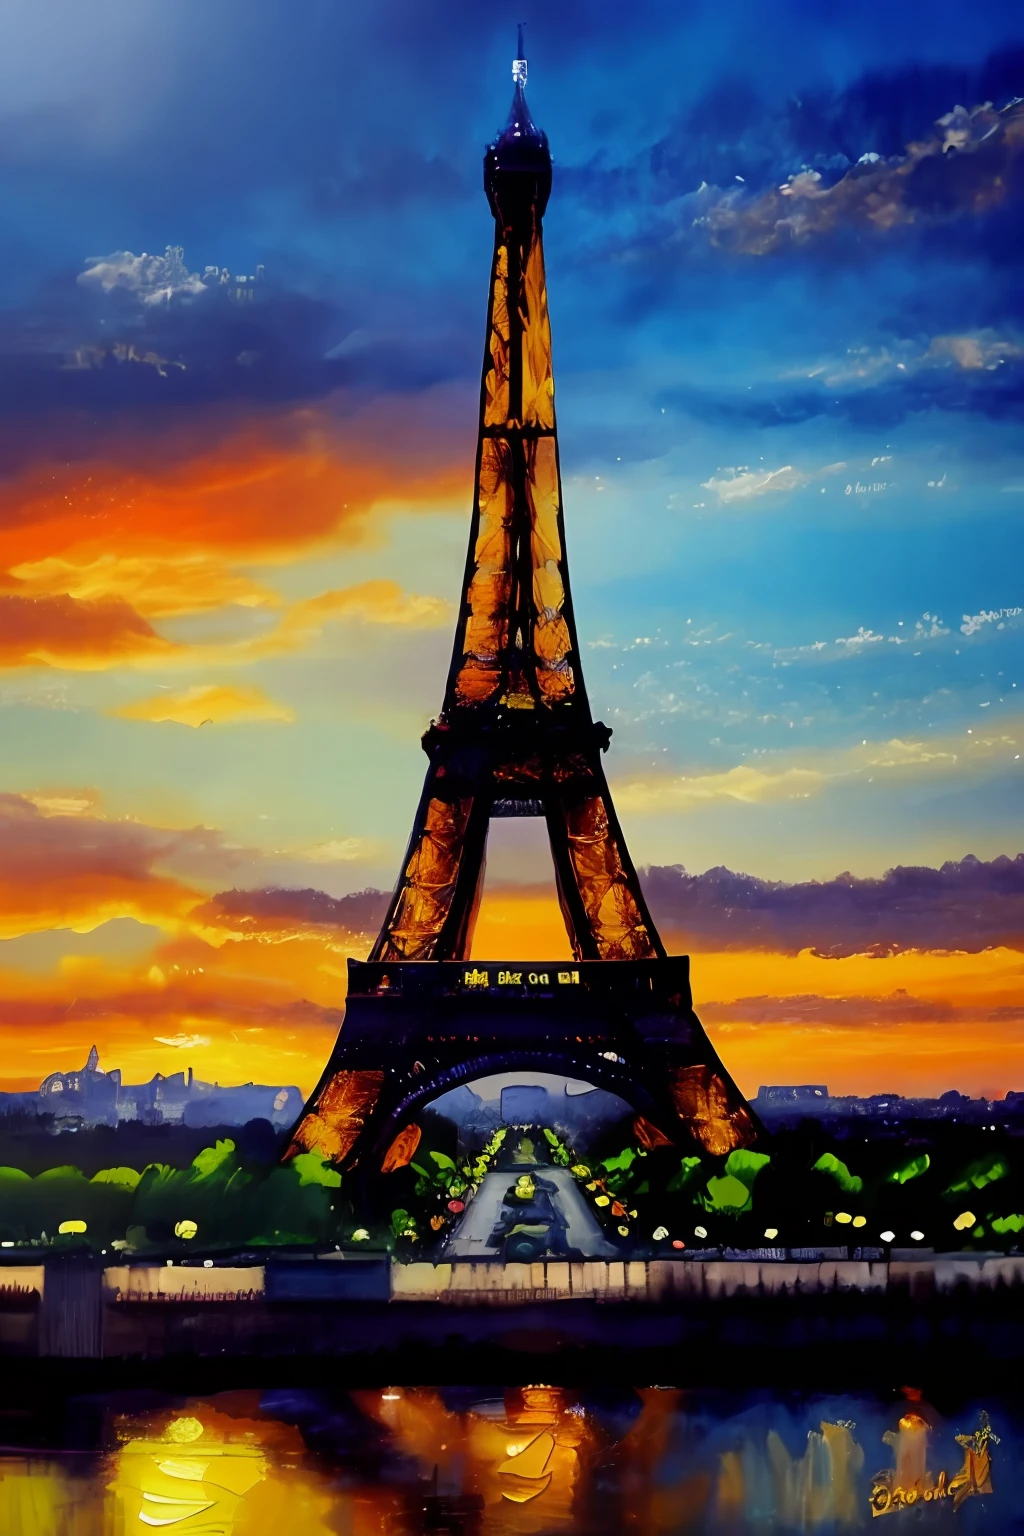 Ölgemälde des Eiffelturms, sehr detailliert, beste Qualität, 8K,Modelshooting-Stil, dramatische Beleuchtung, Drittelregel